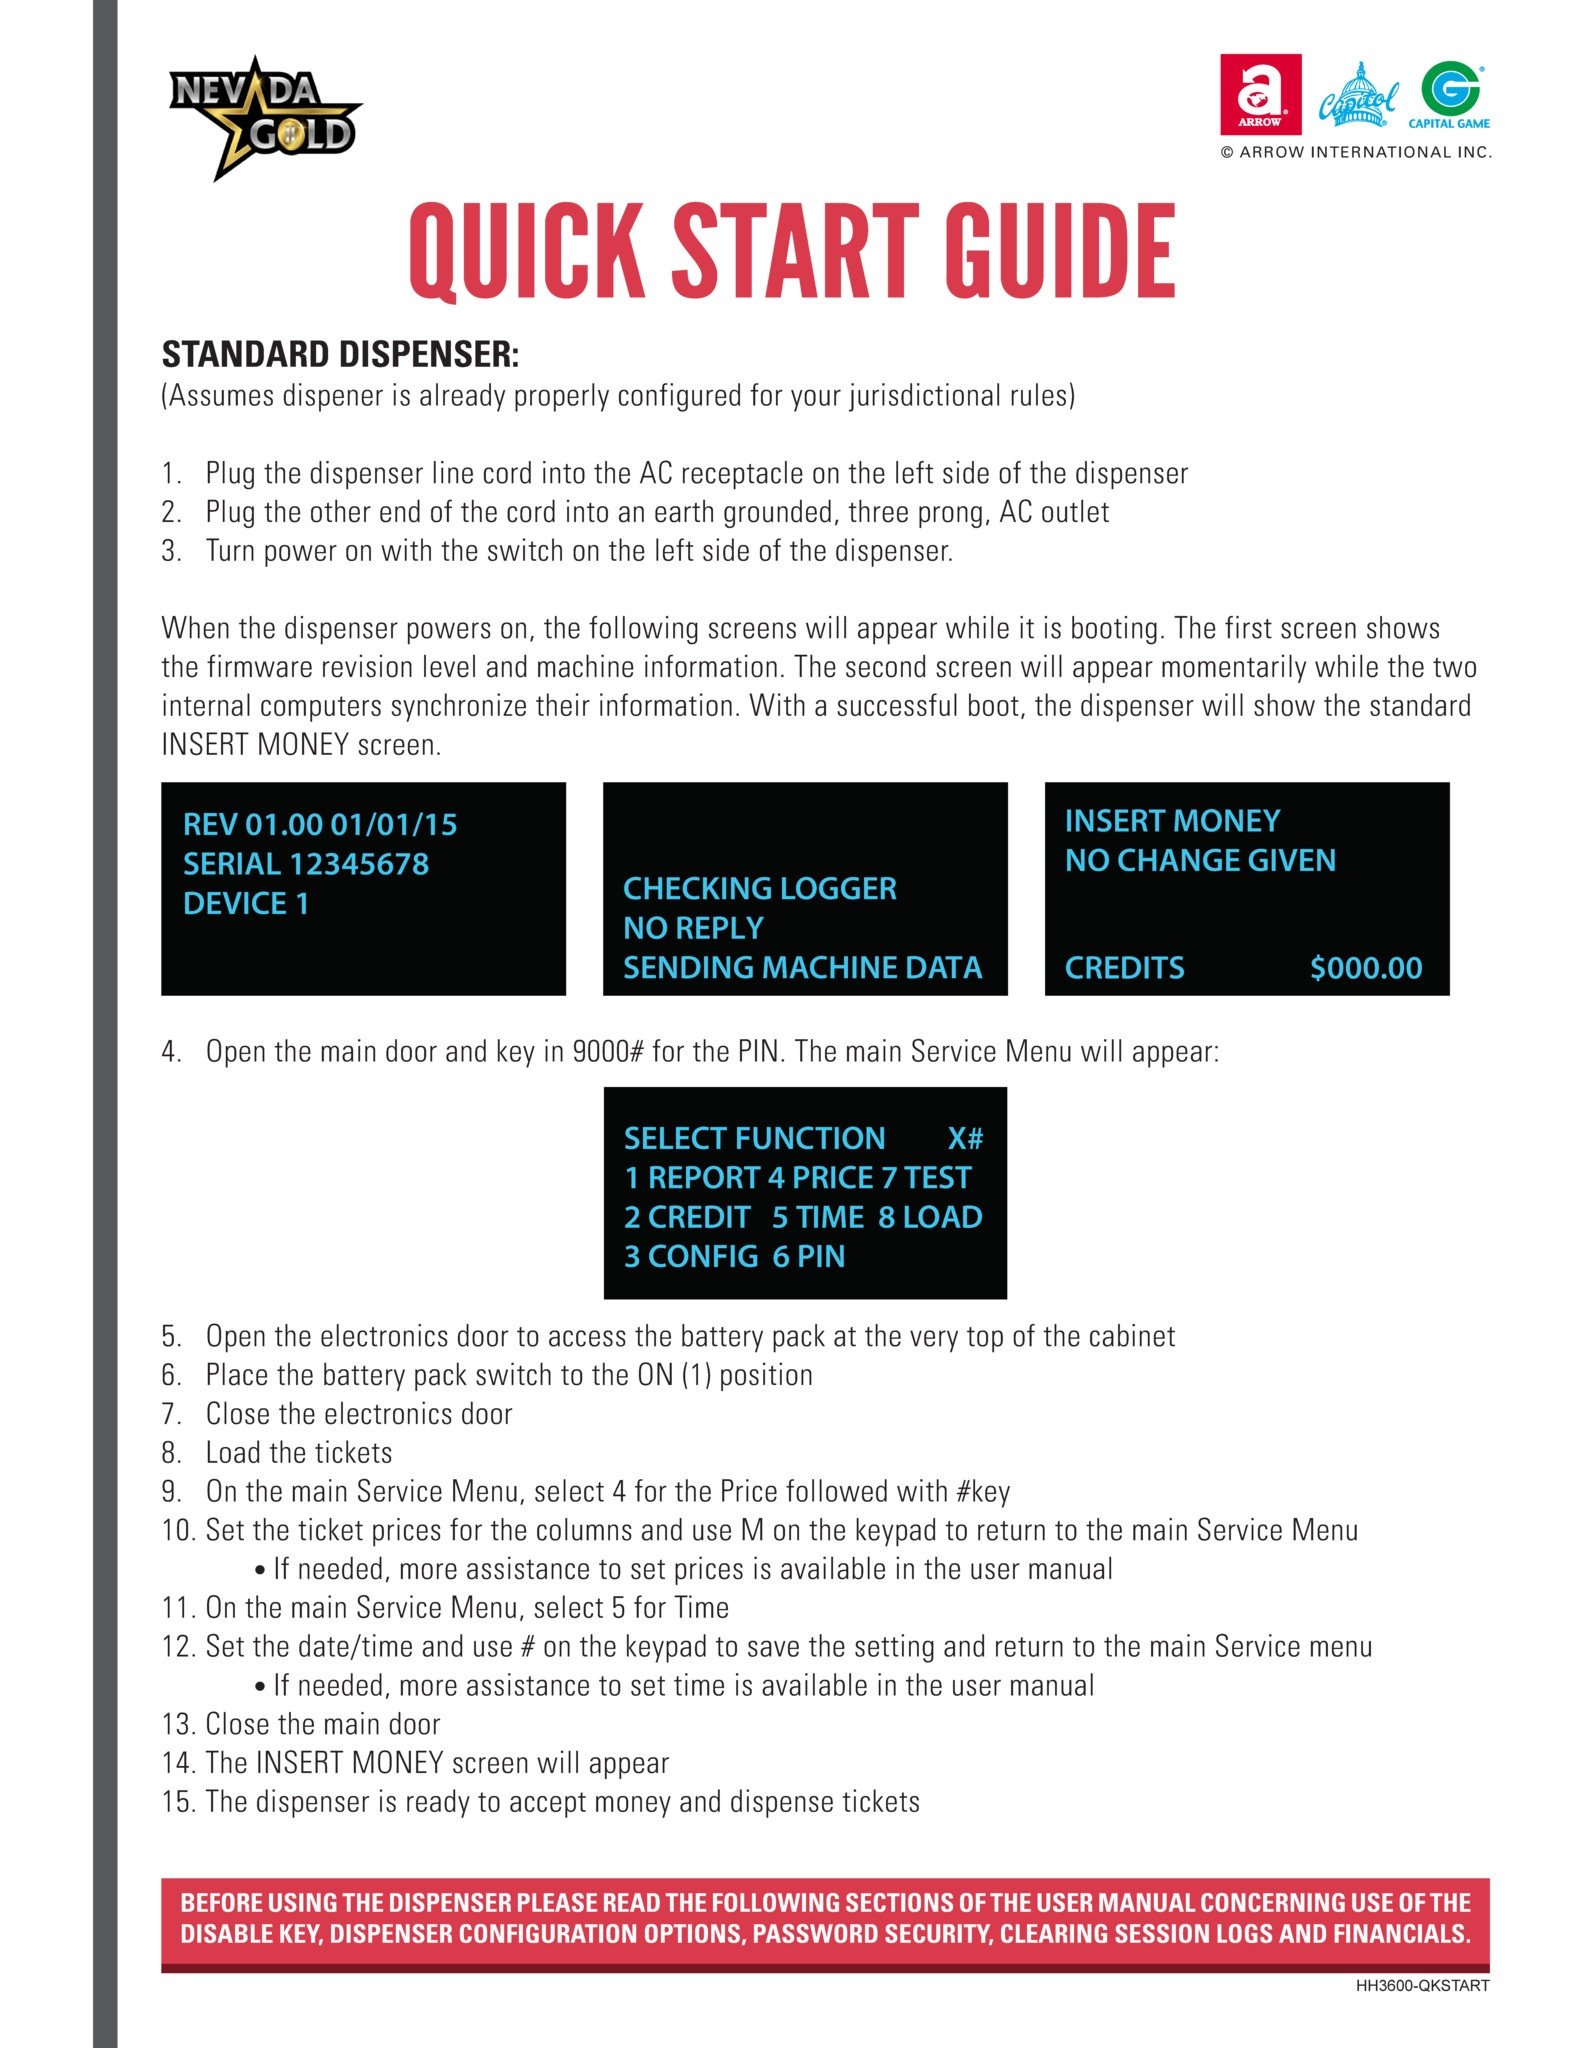 Nevada Gold II Quick Start Guide